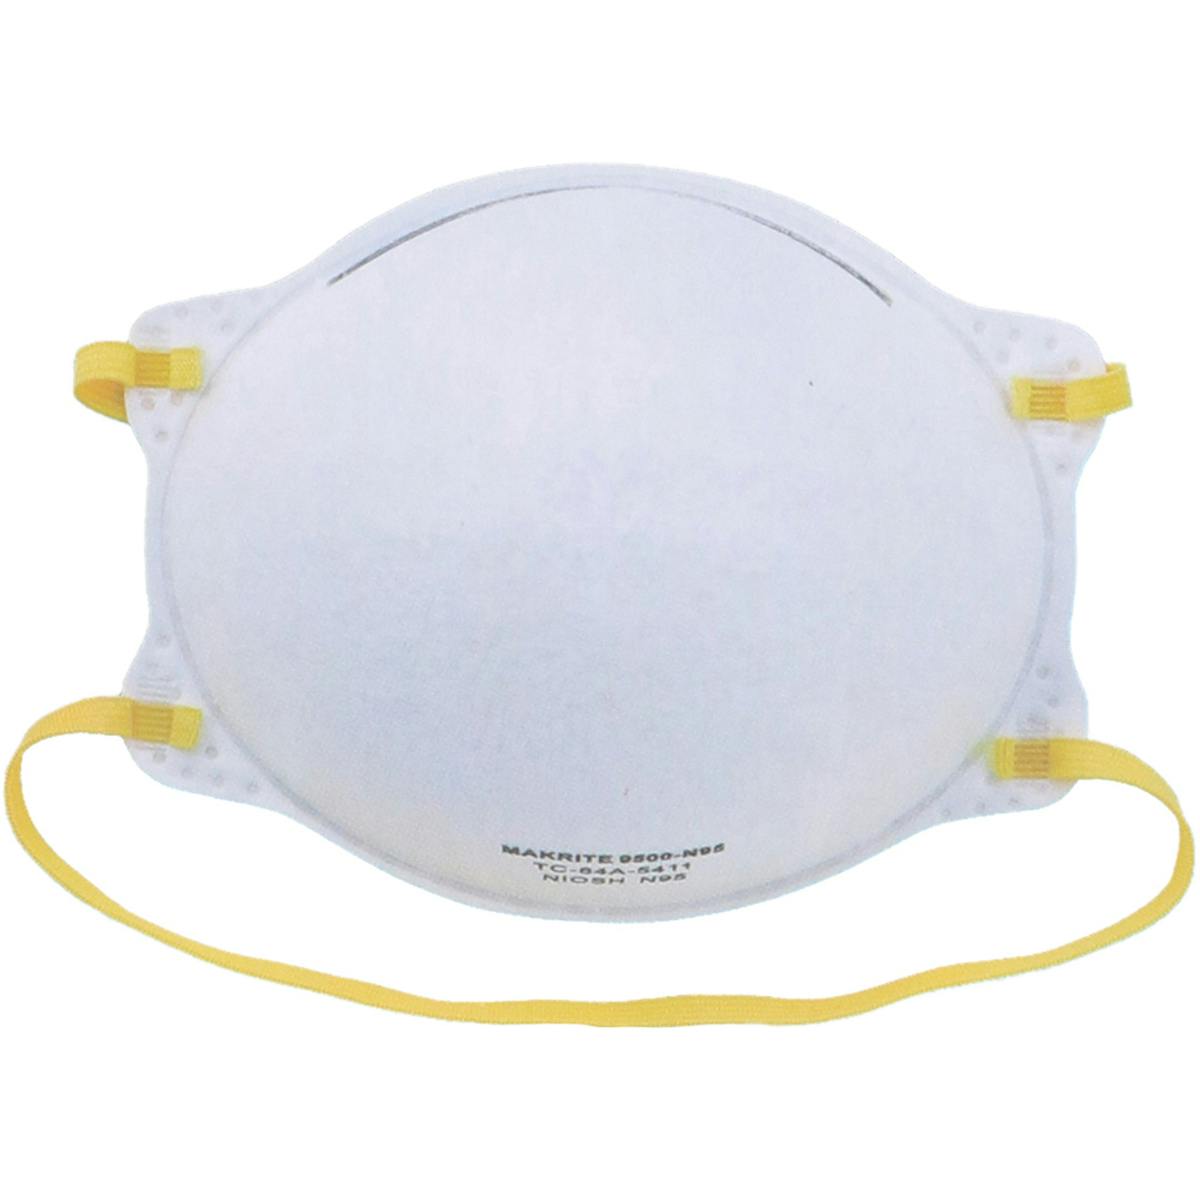 N95 Disposable Respirator - 20 Pack, White (MK9500-N95) - OS_0